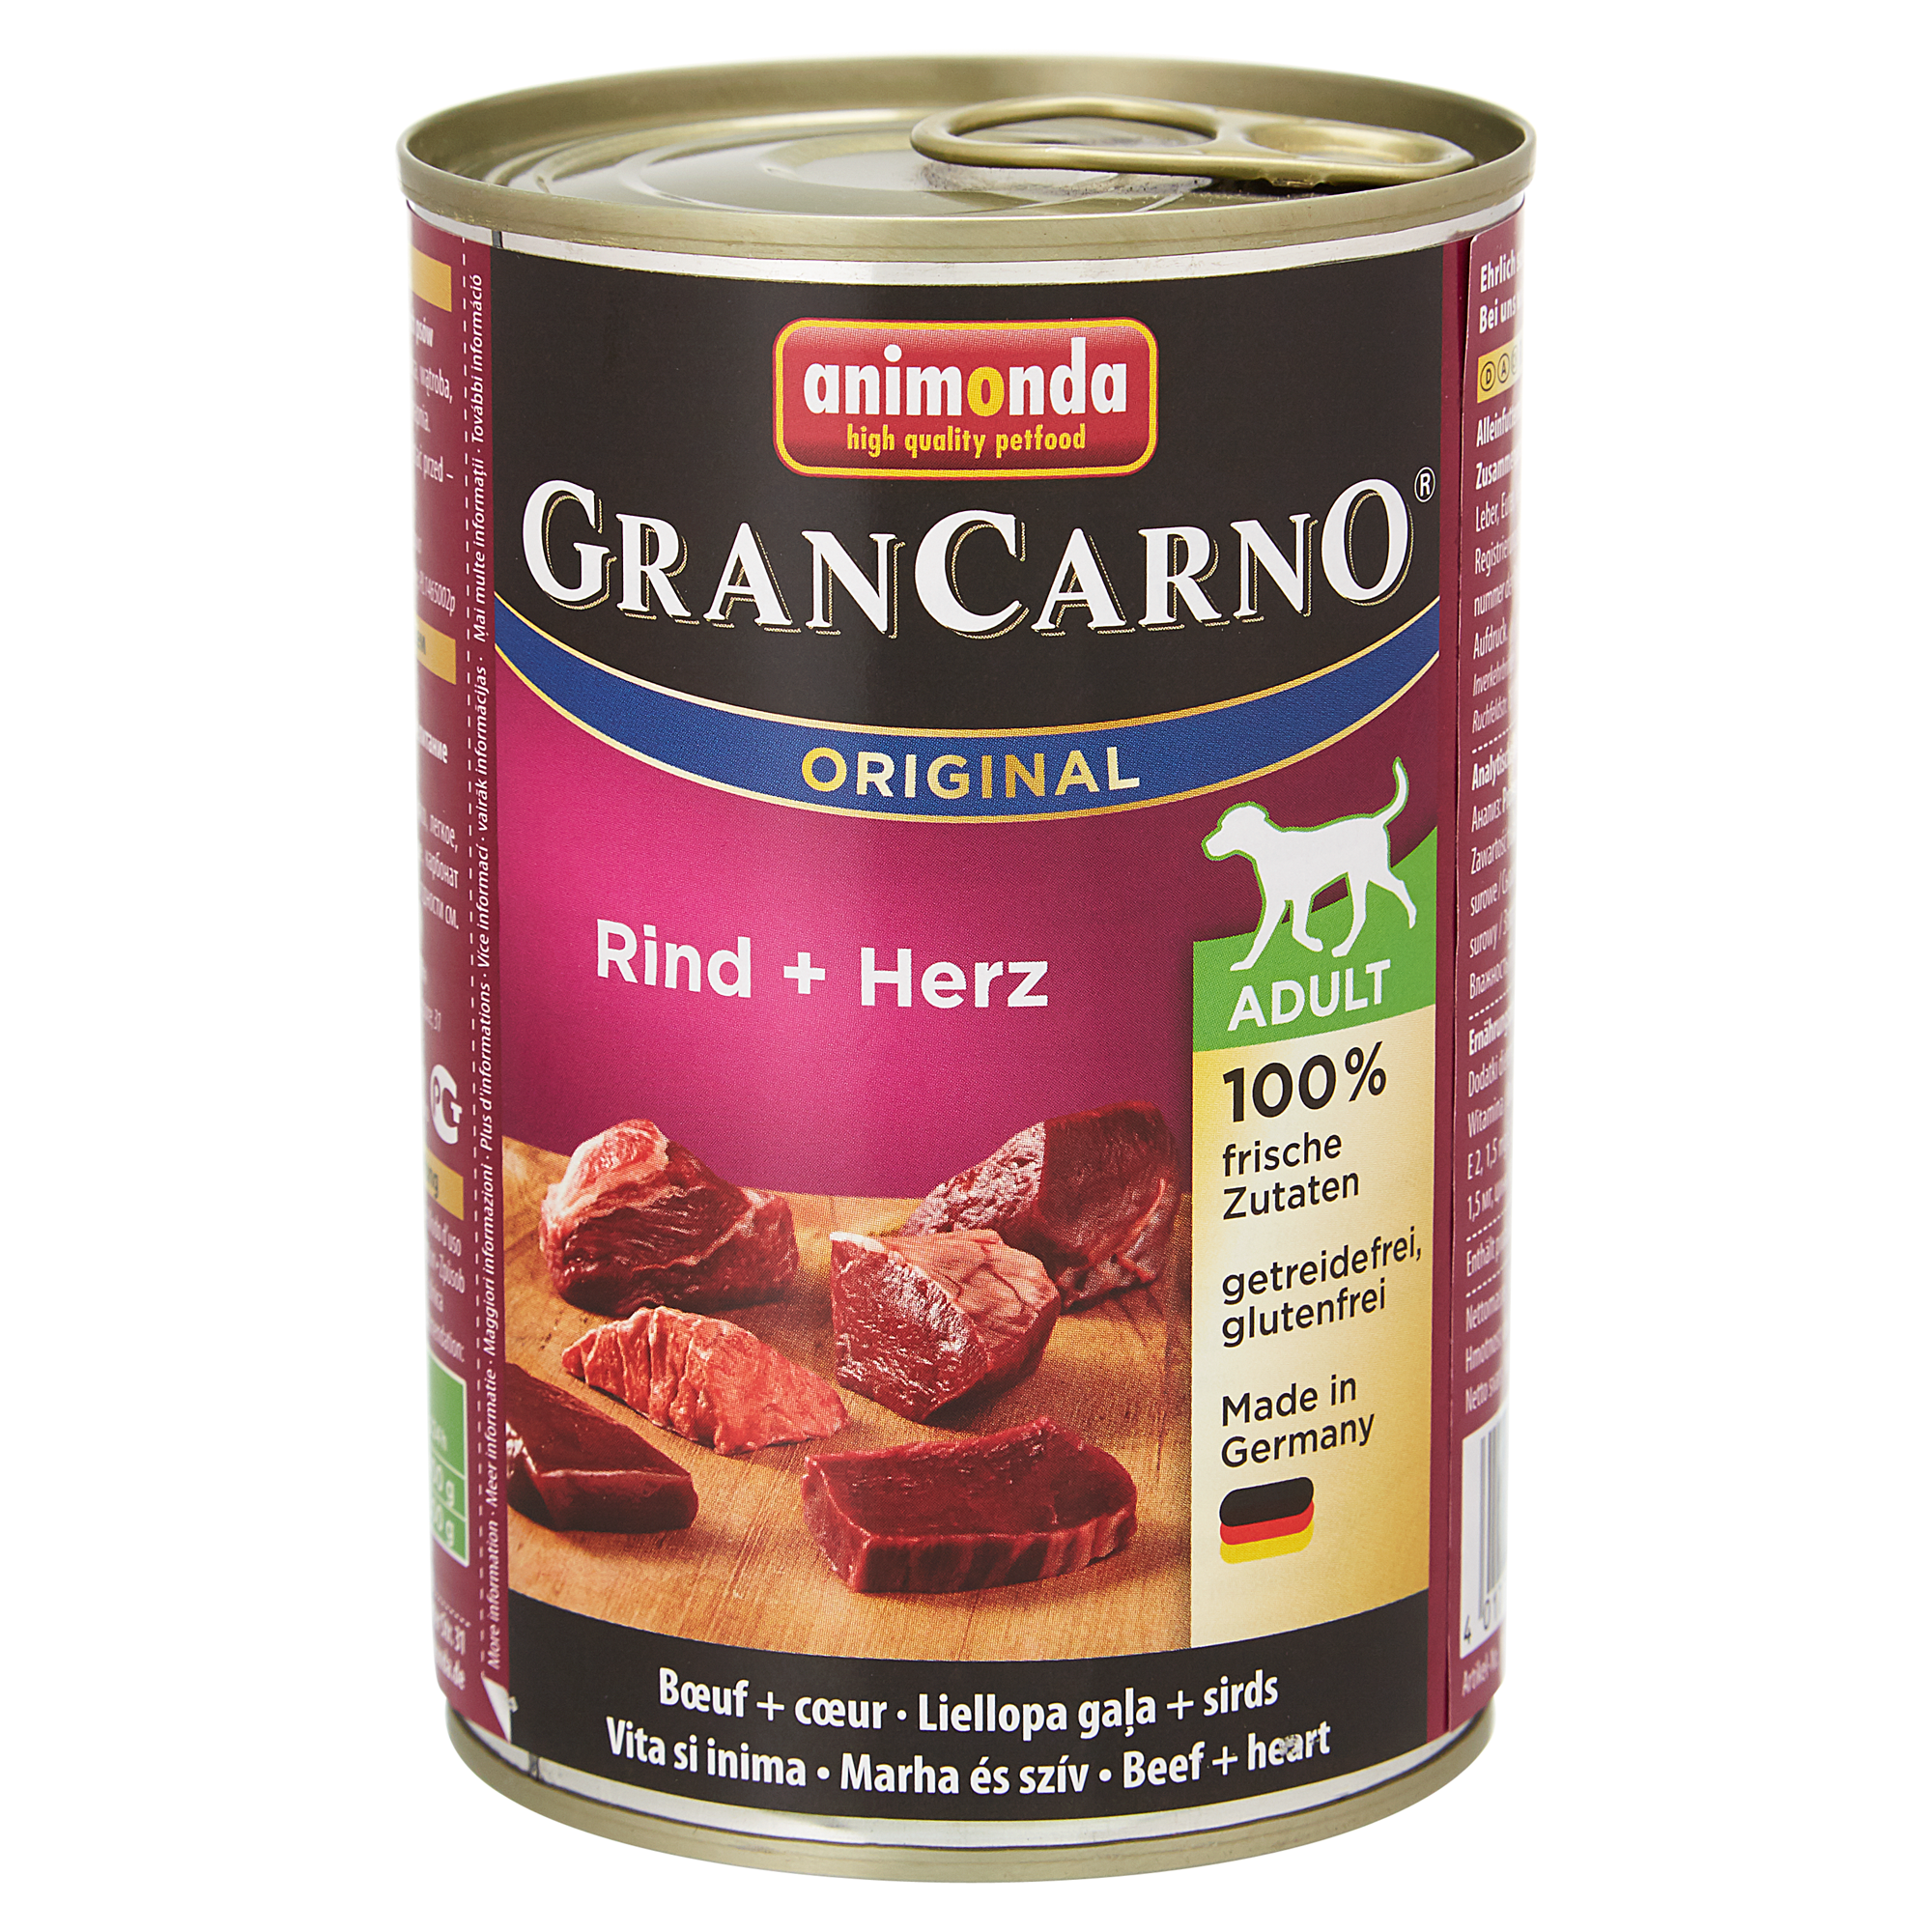 Hundenassfutter "Gran Carno" Original mit Rind/Herz 400 g + product picture